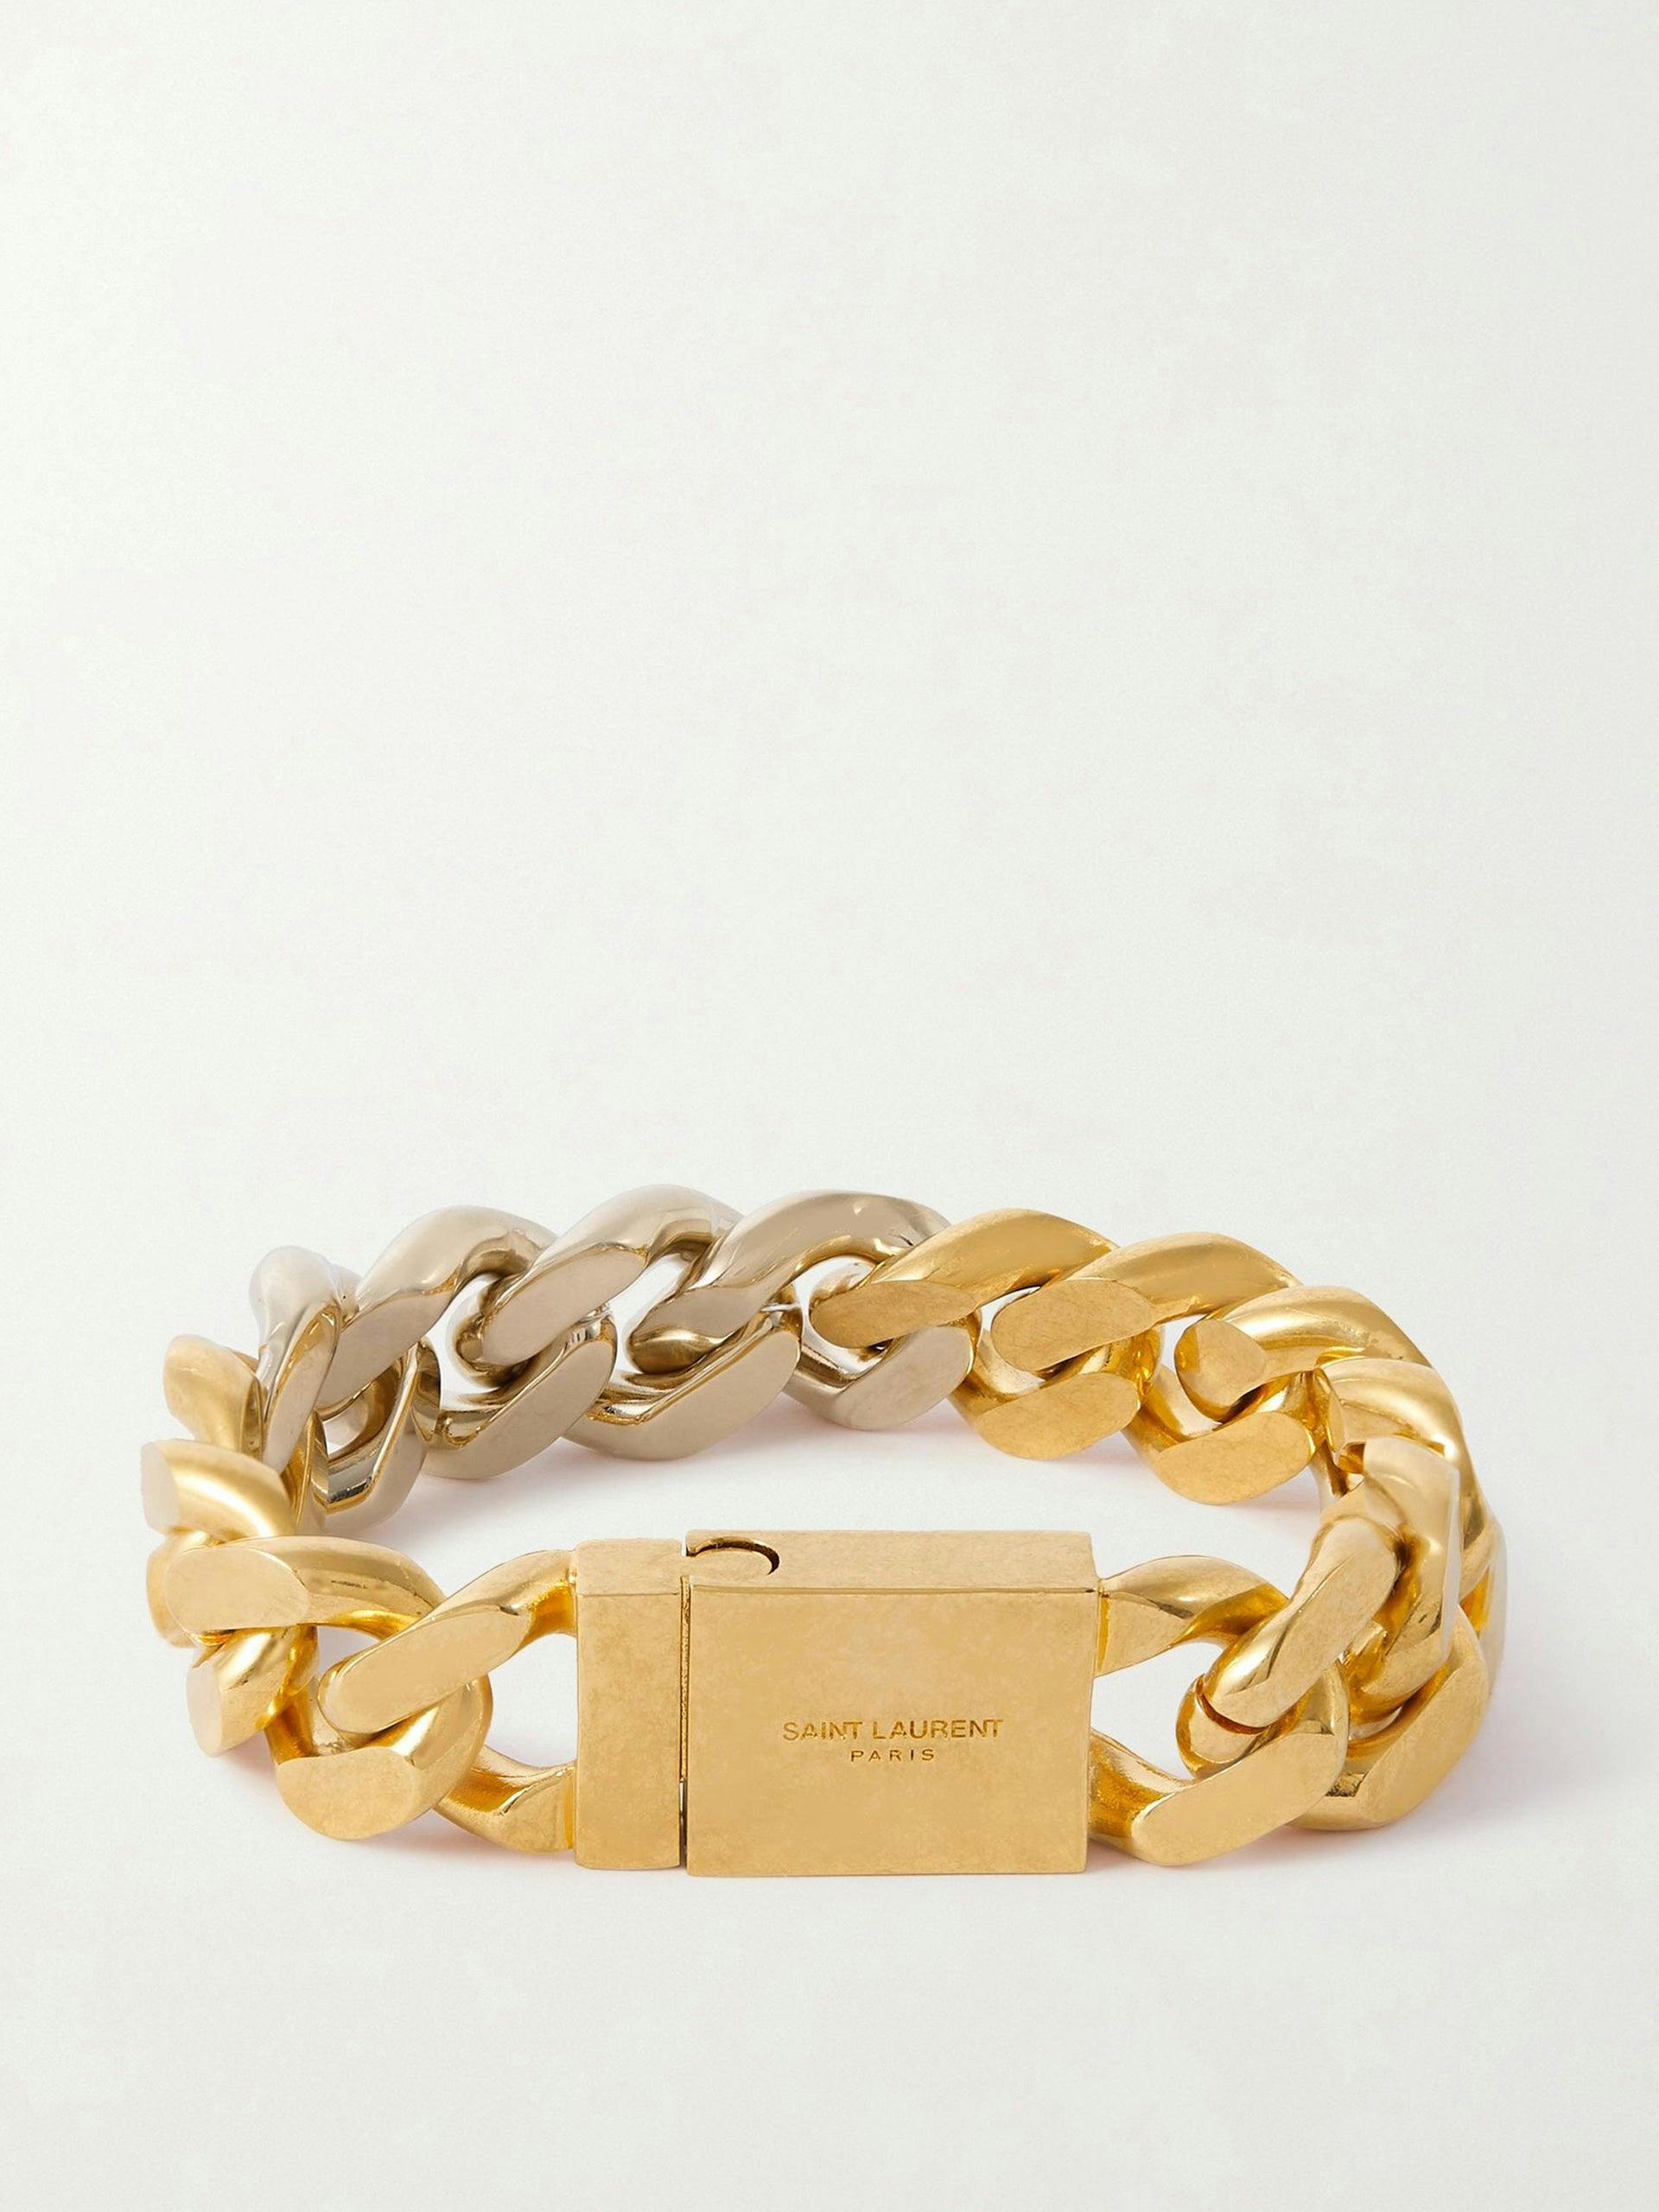 Chunky gold-tone bracelet